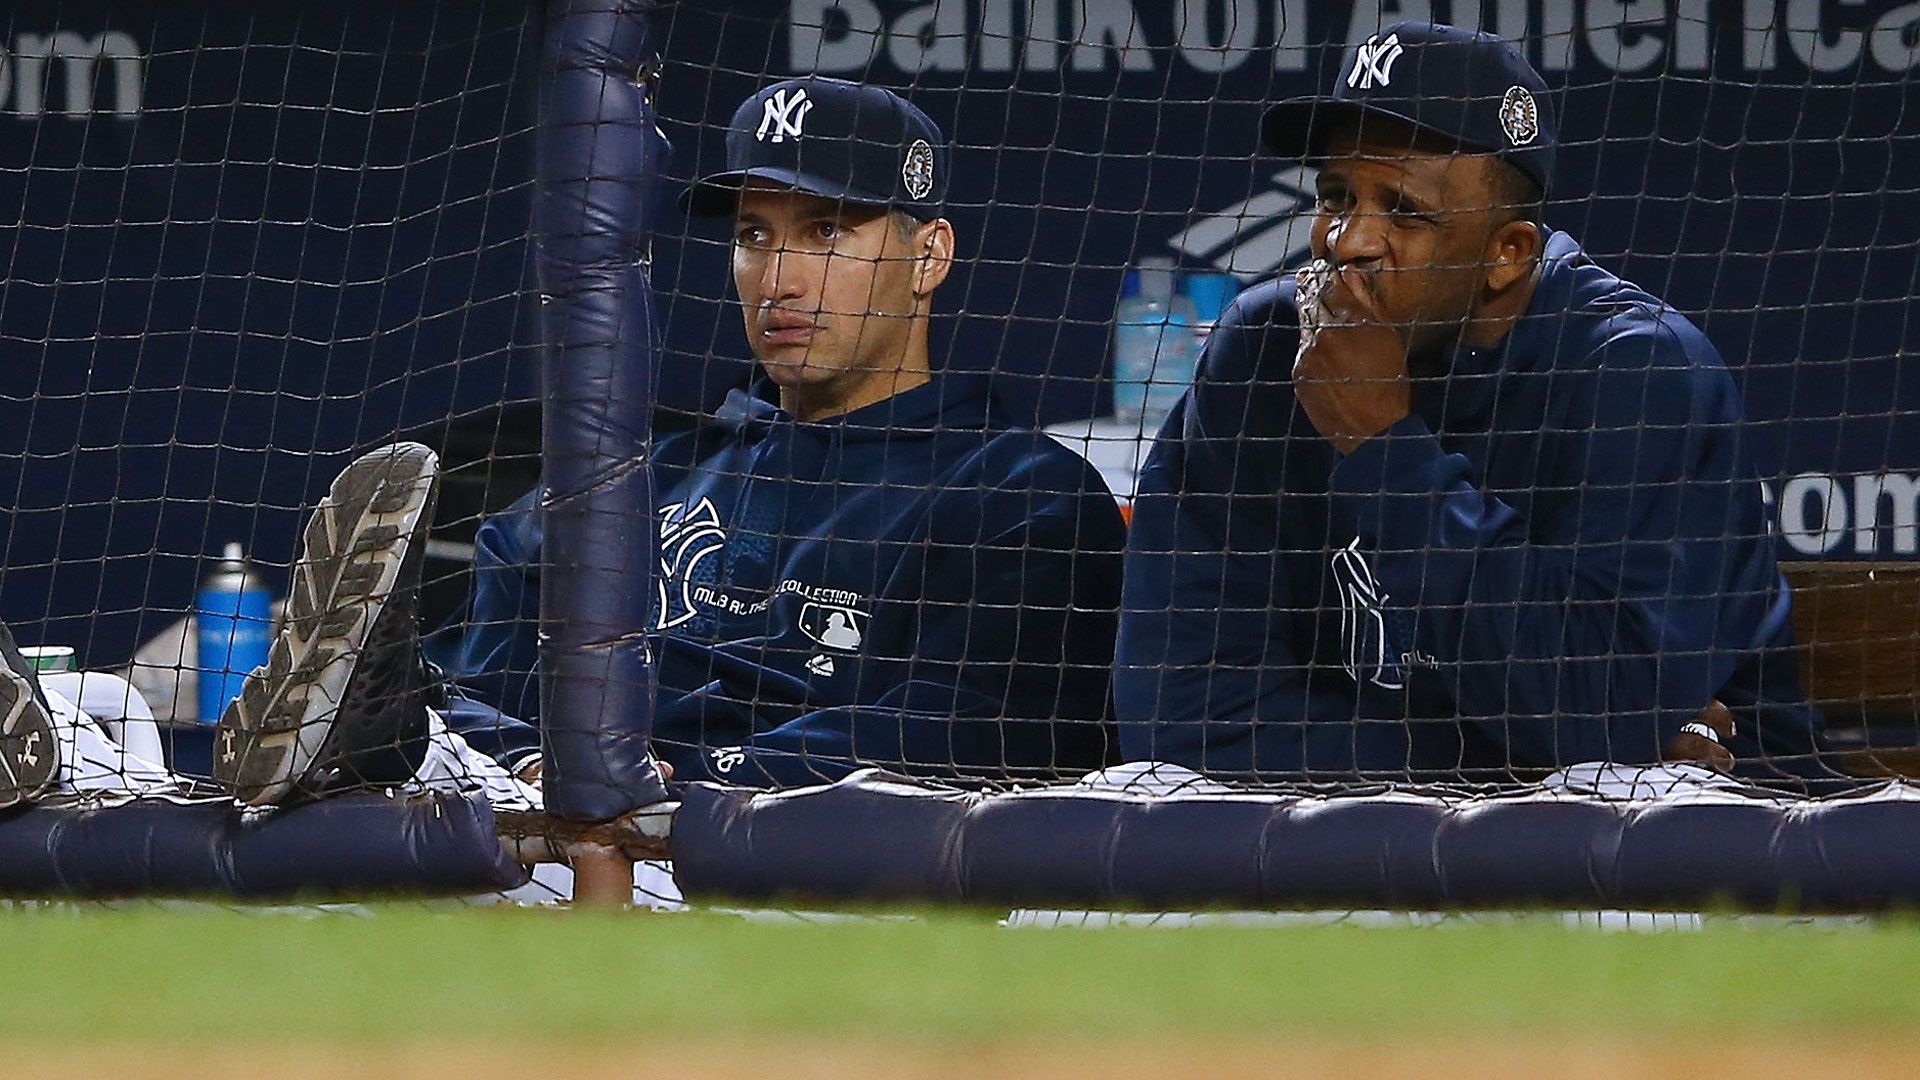 Yankees' Joba Chamberlain hit with broken bat as his bad luck